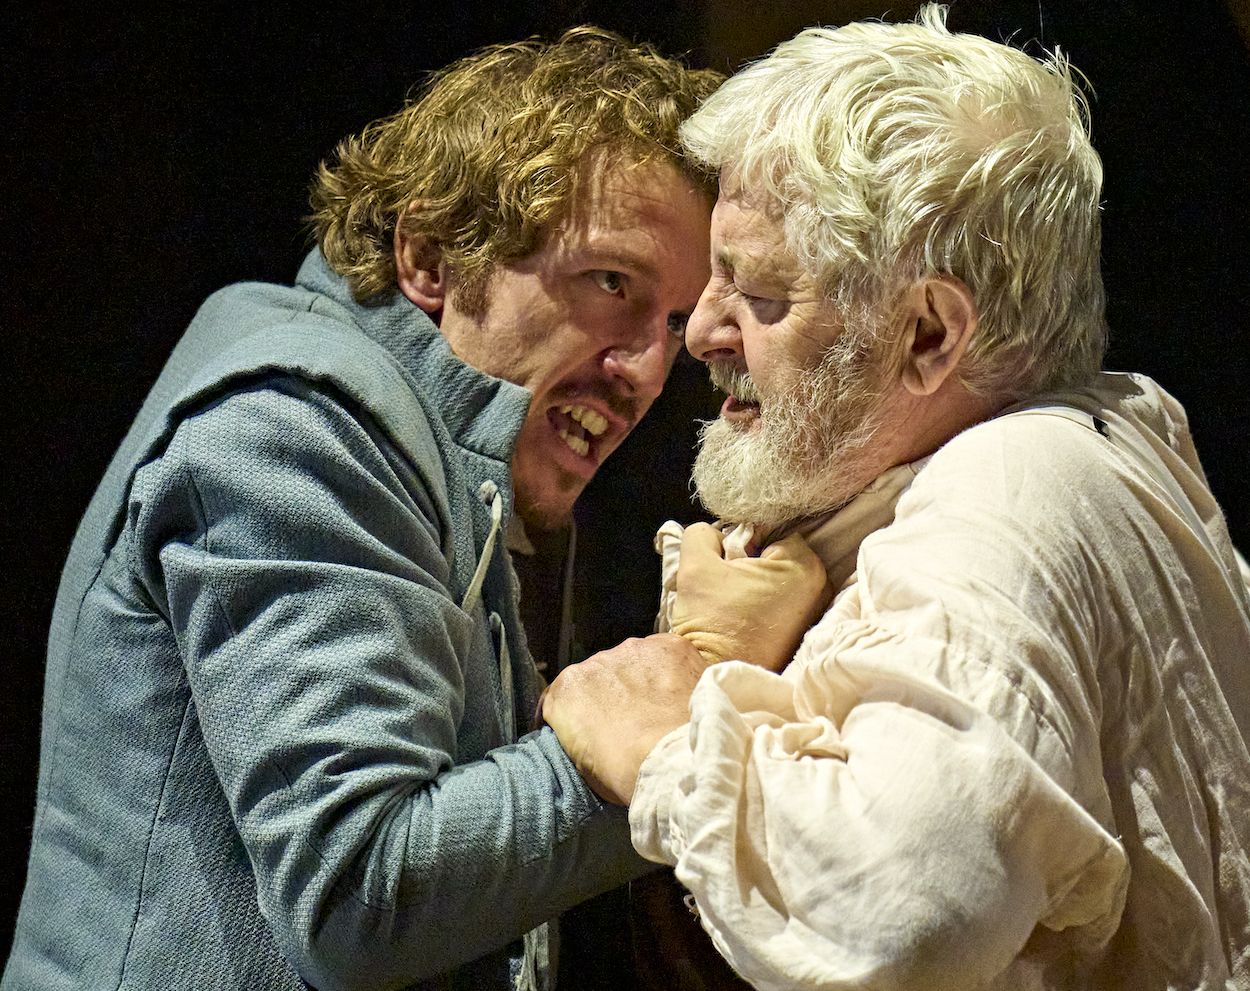 Tom Varey as Will, Peter Wight as John Shakespeare in Hamnet